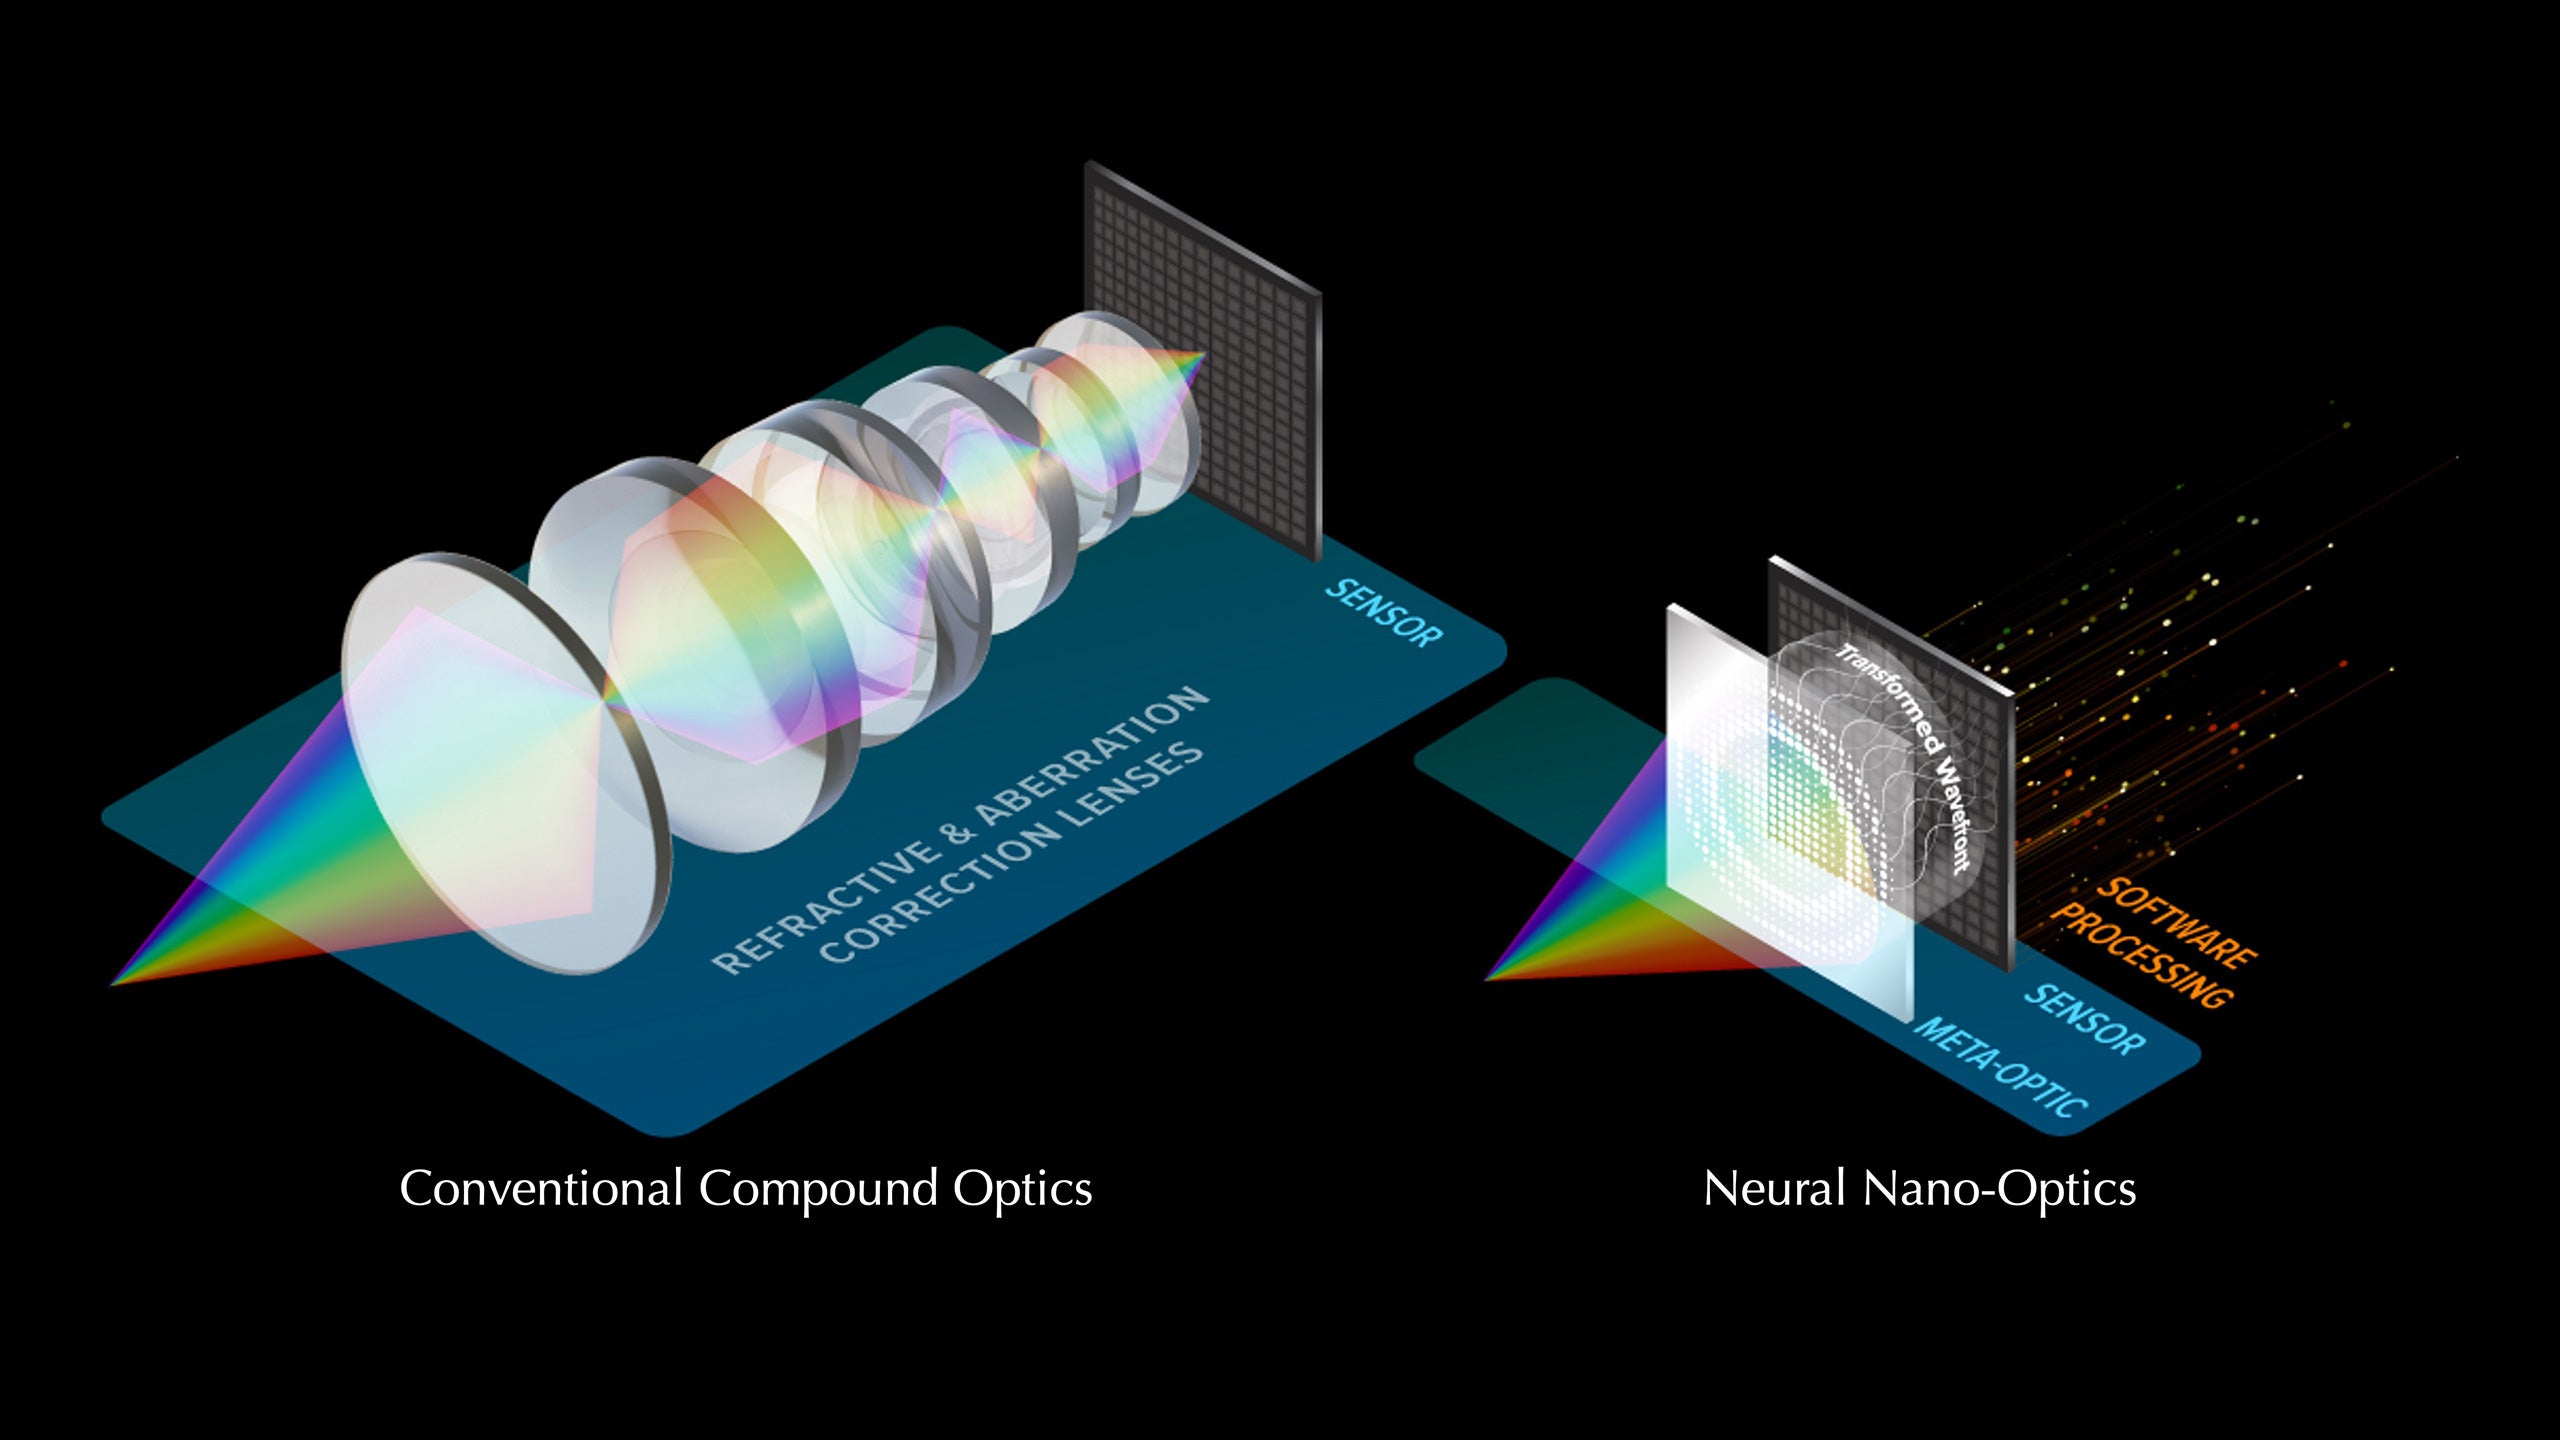 Neural nano optics remove the need for bulky compound optics. 